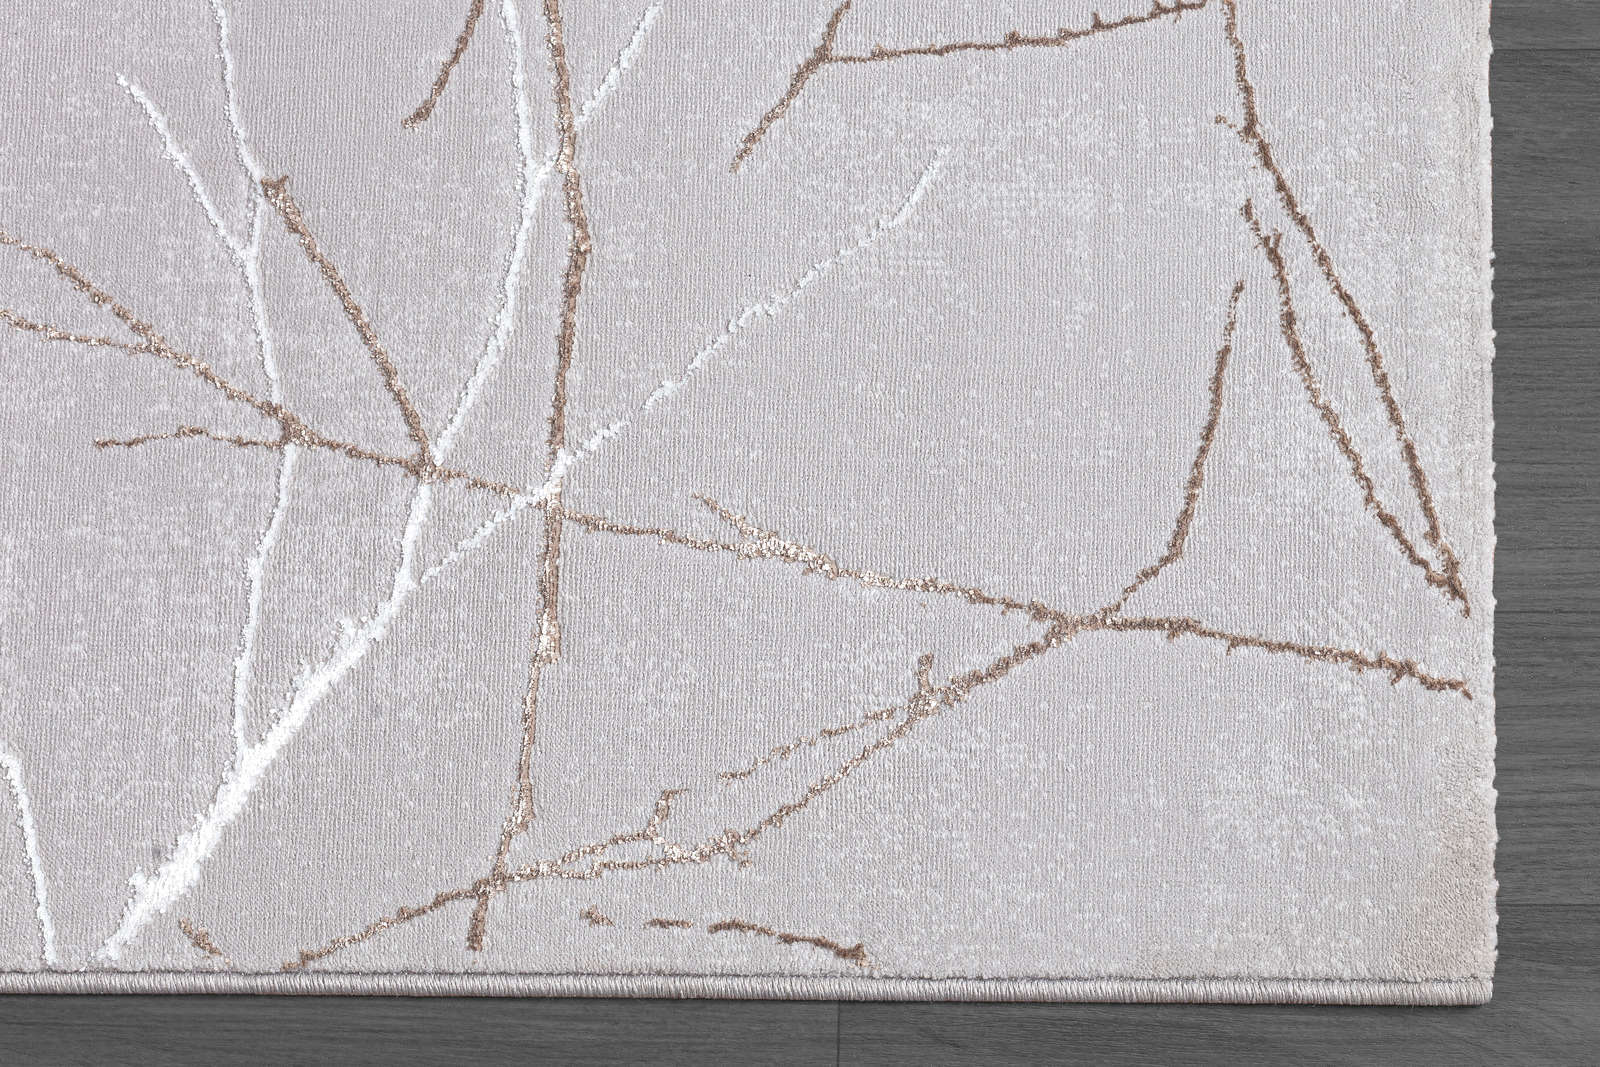             Bemusterter Hochflor Teppich in Grau – 150 x 80 cm
        